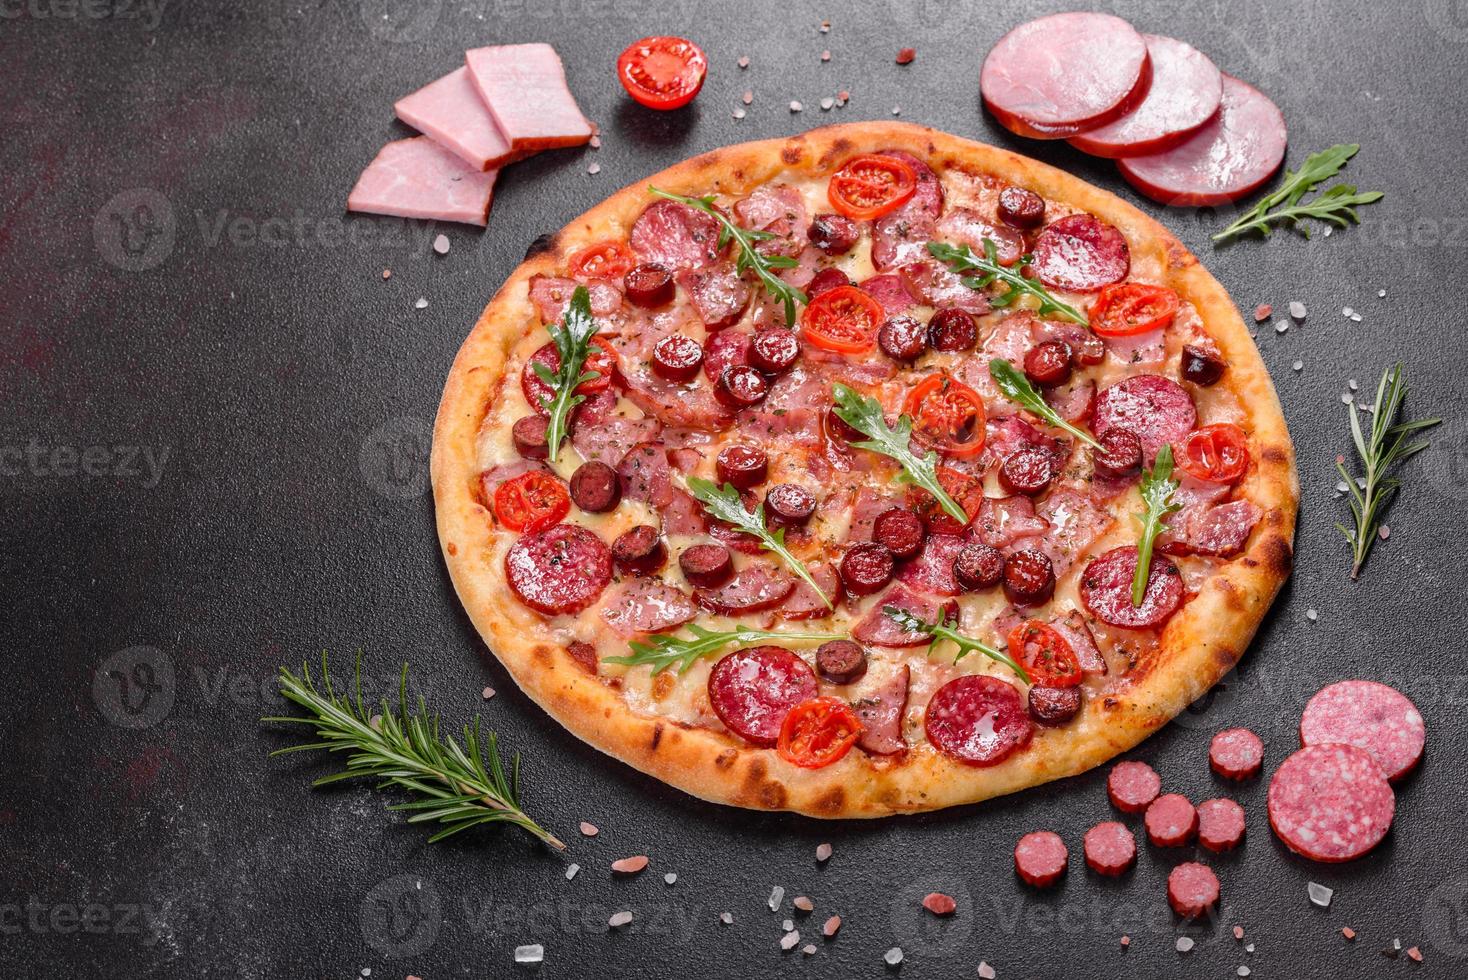 pizza de pepperoni con queso mozzarella, salami y jamón foto